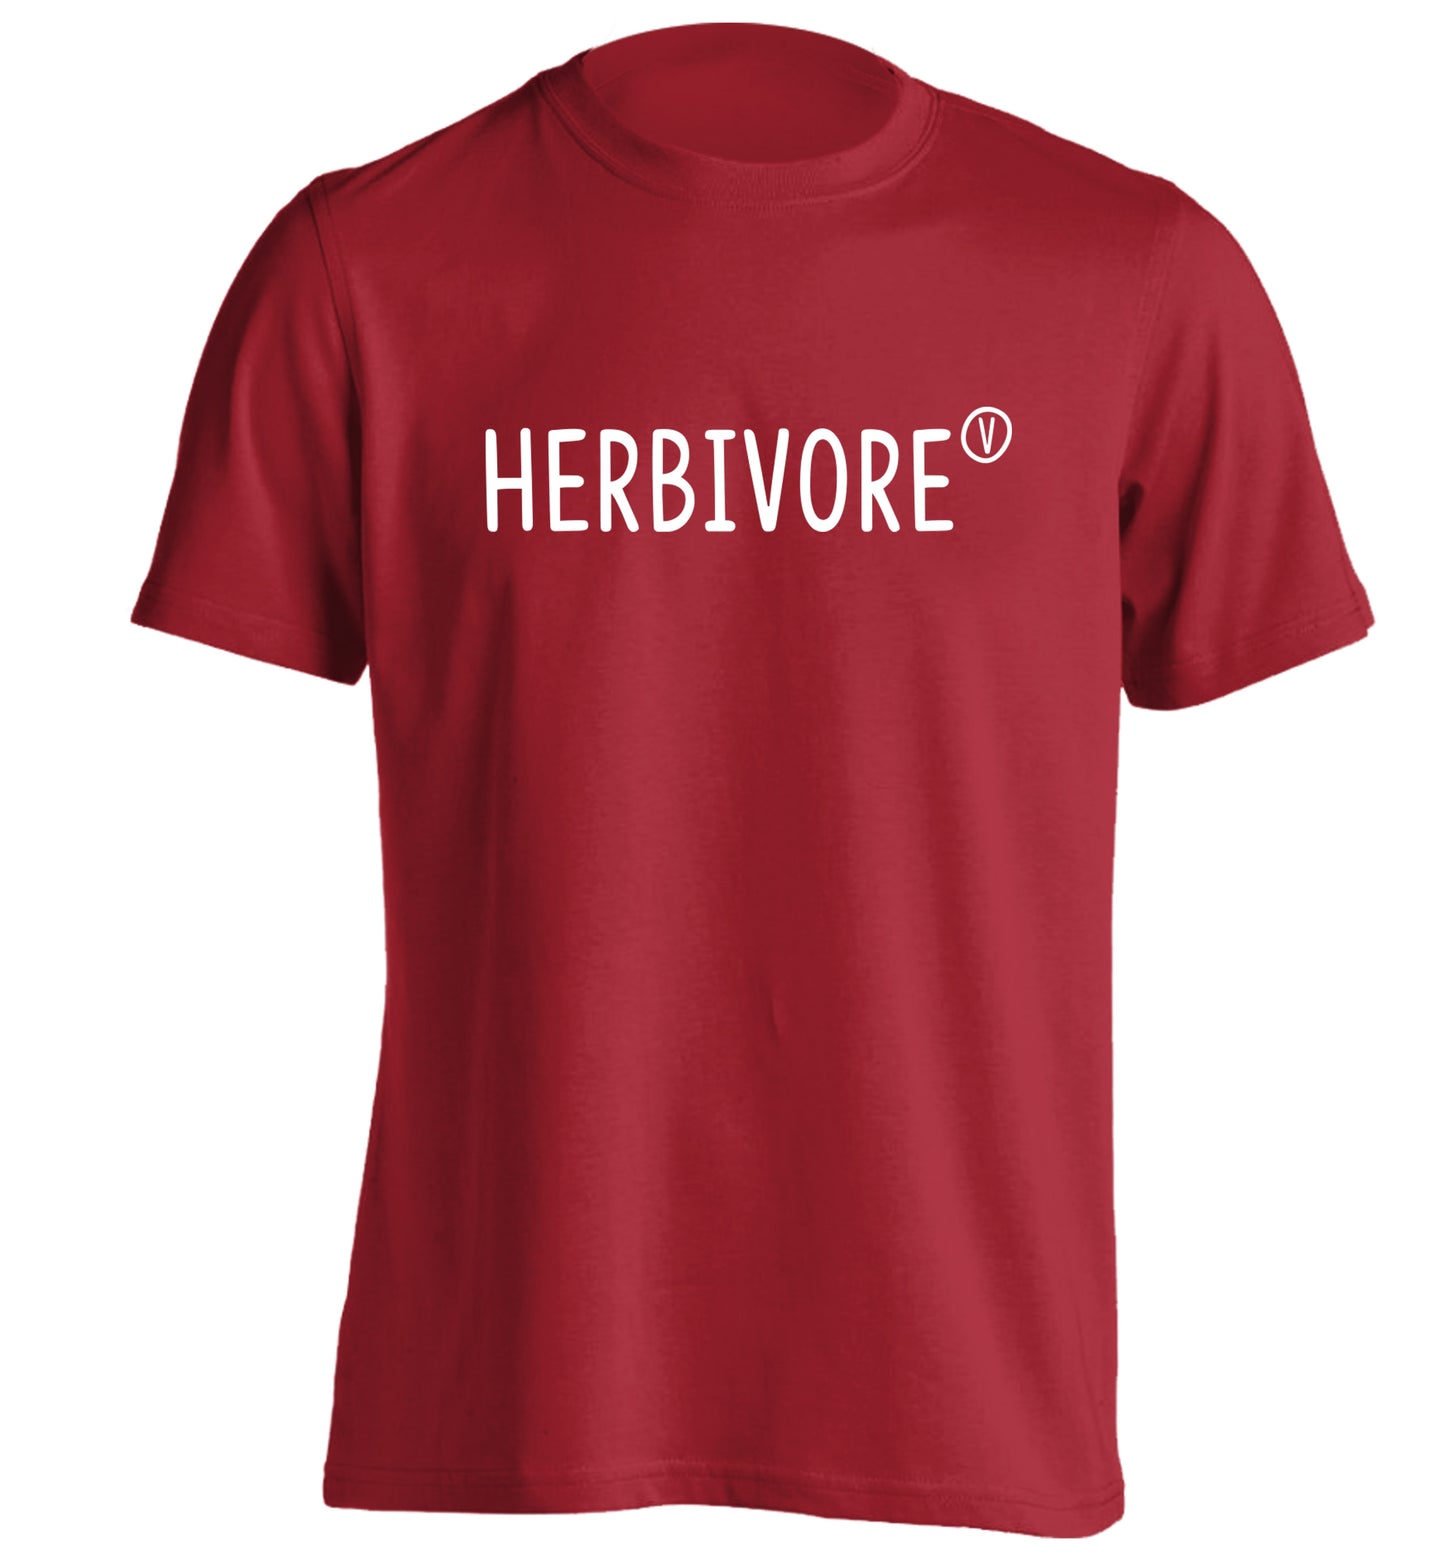 Herbivore adults unisex red Tshirt 2XL